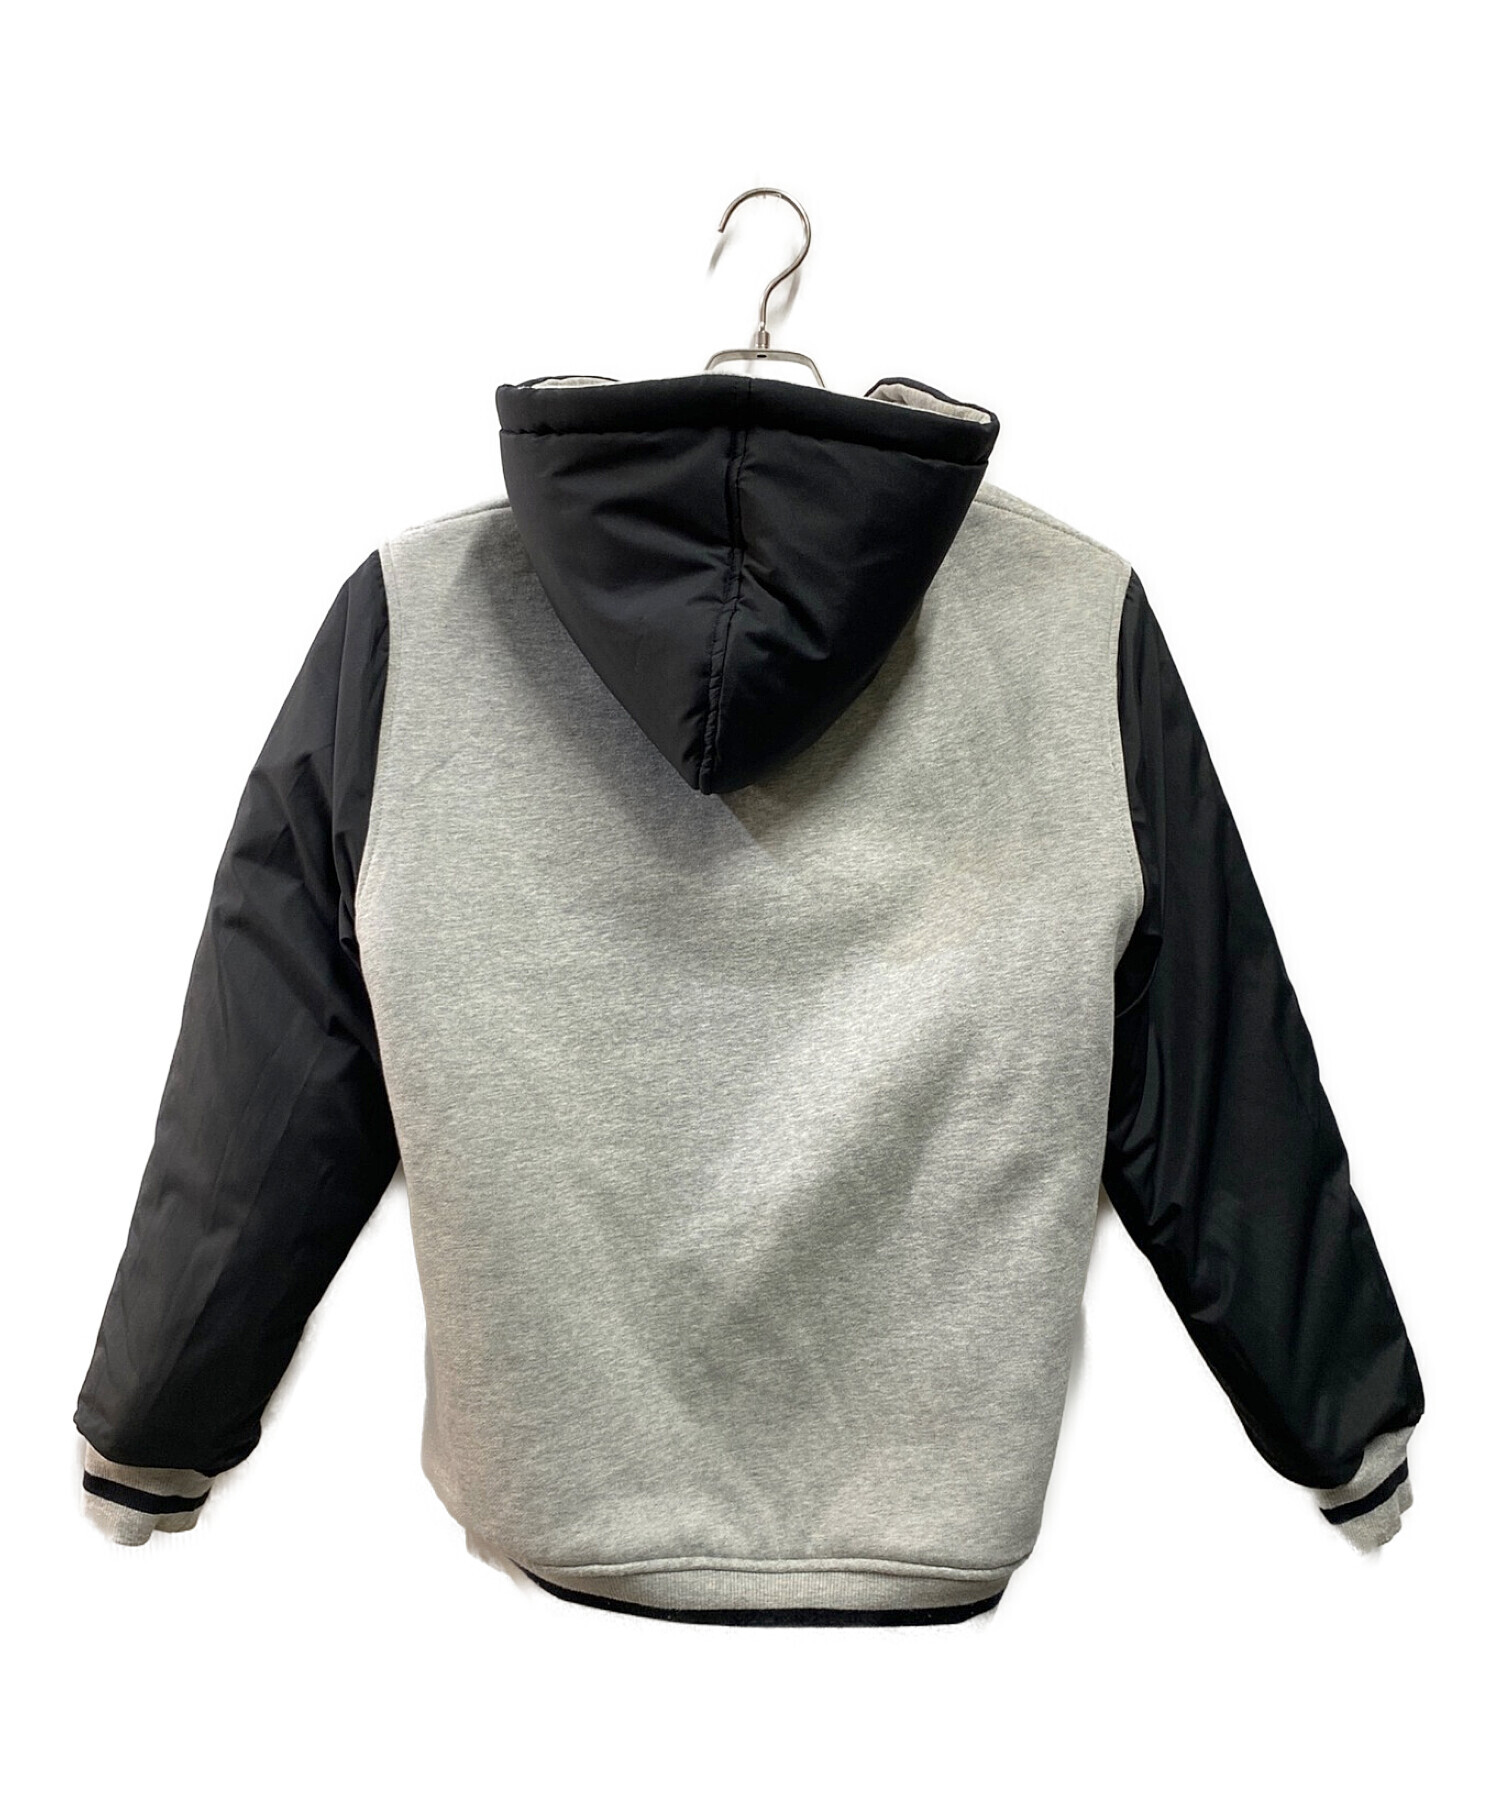 Champion (チャンピオン) SUPREME (シュプリーム) Reversible Hooded Jacket ブラック サイズ:М